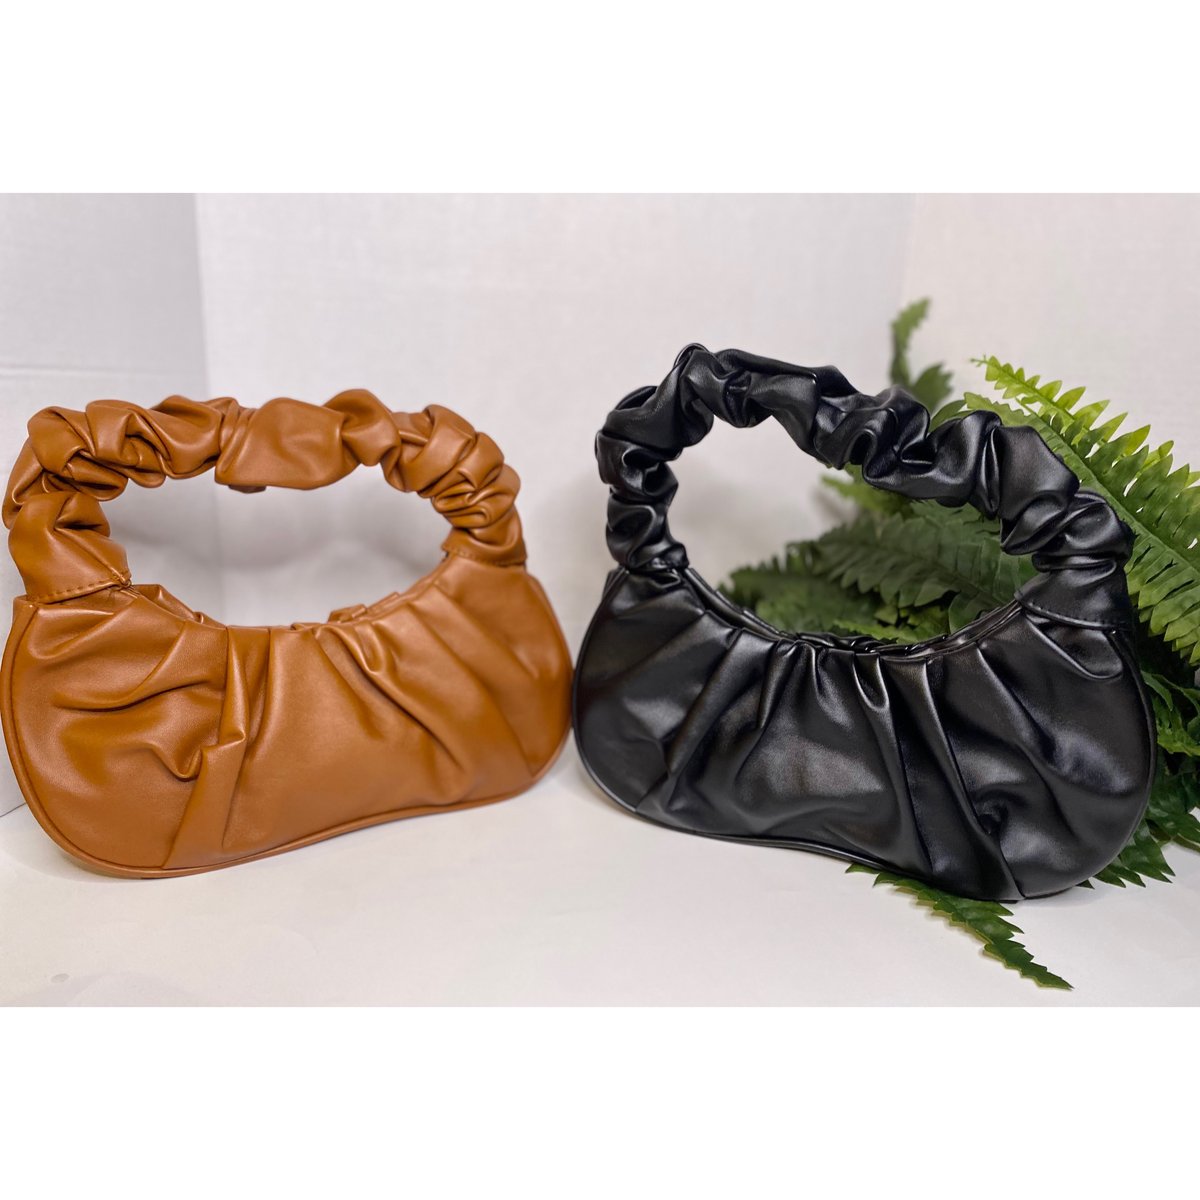 Image of Black leather bag